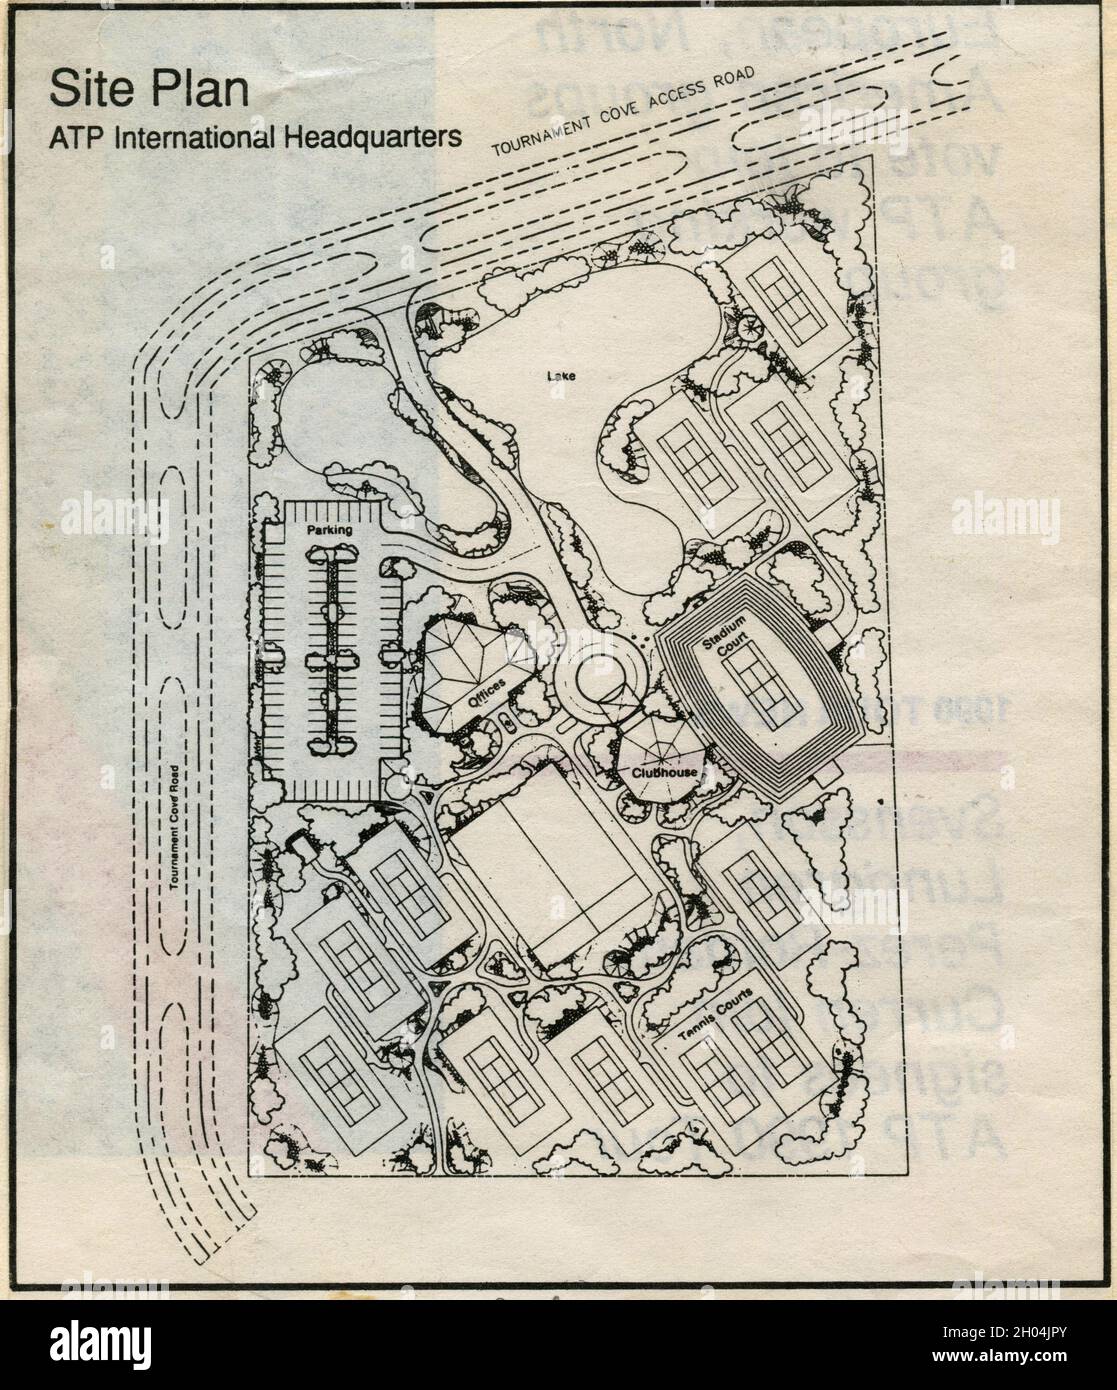 Site plan of the ATP Association Tennis Professionals Headquarters, 1988 Stock Photo